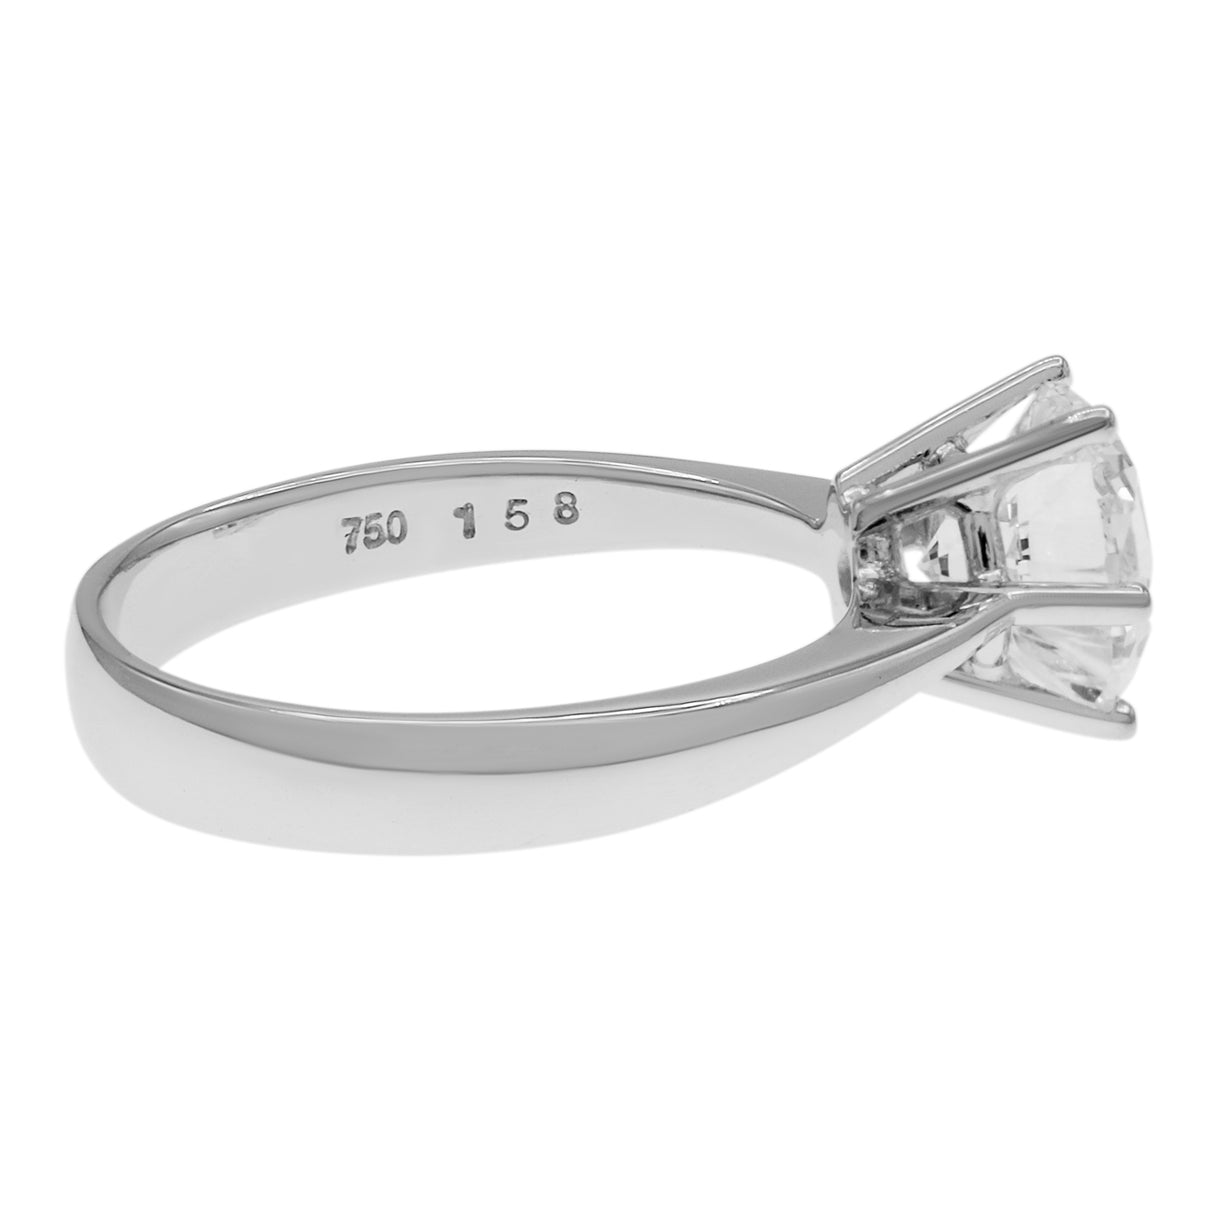 18K White Gold 1.58 Carat Solitaire Diamond Ring